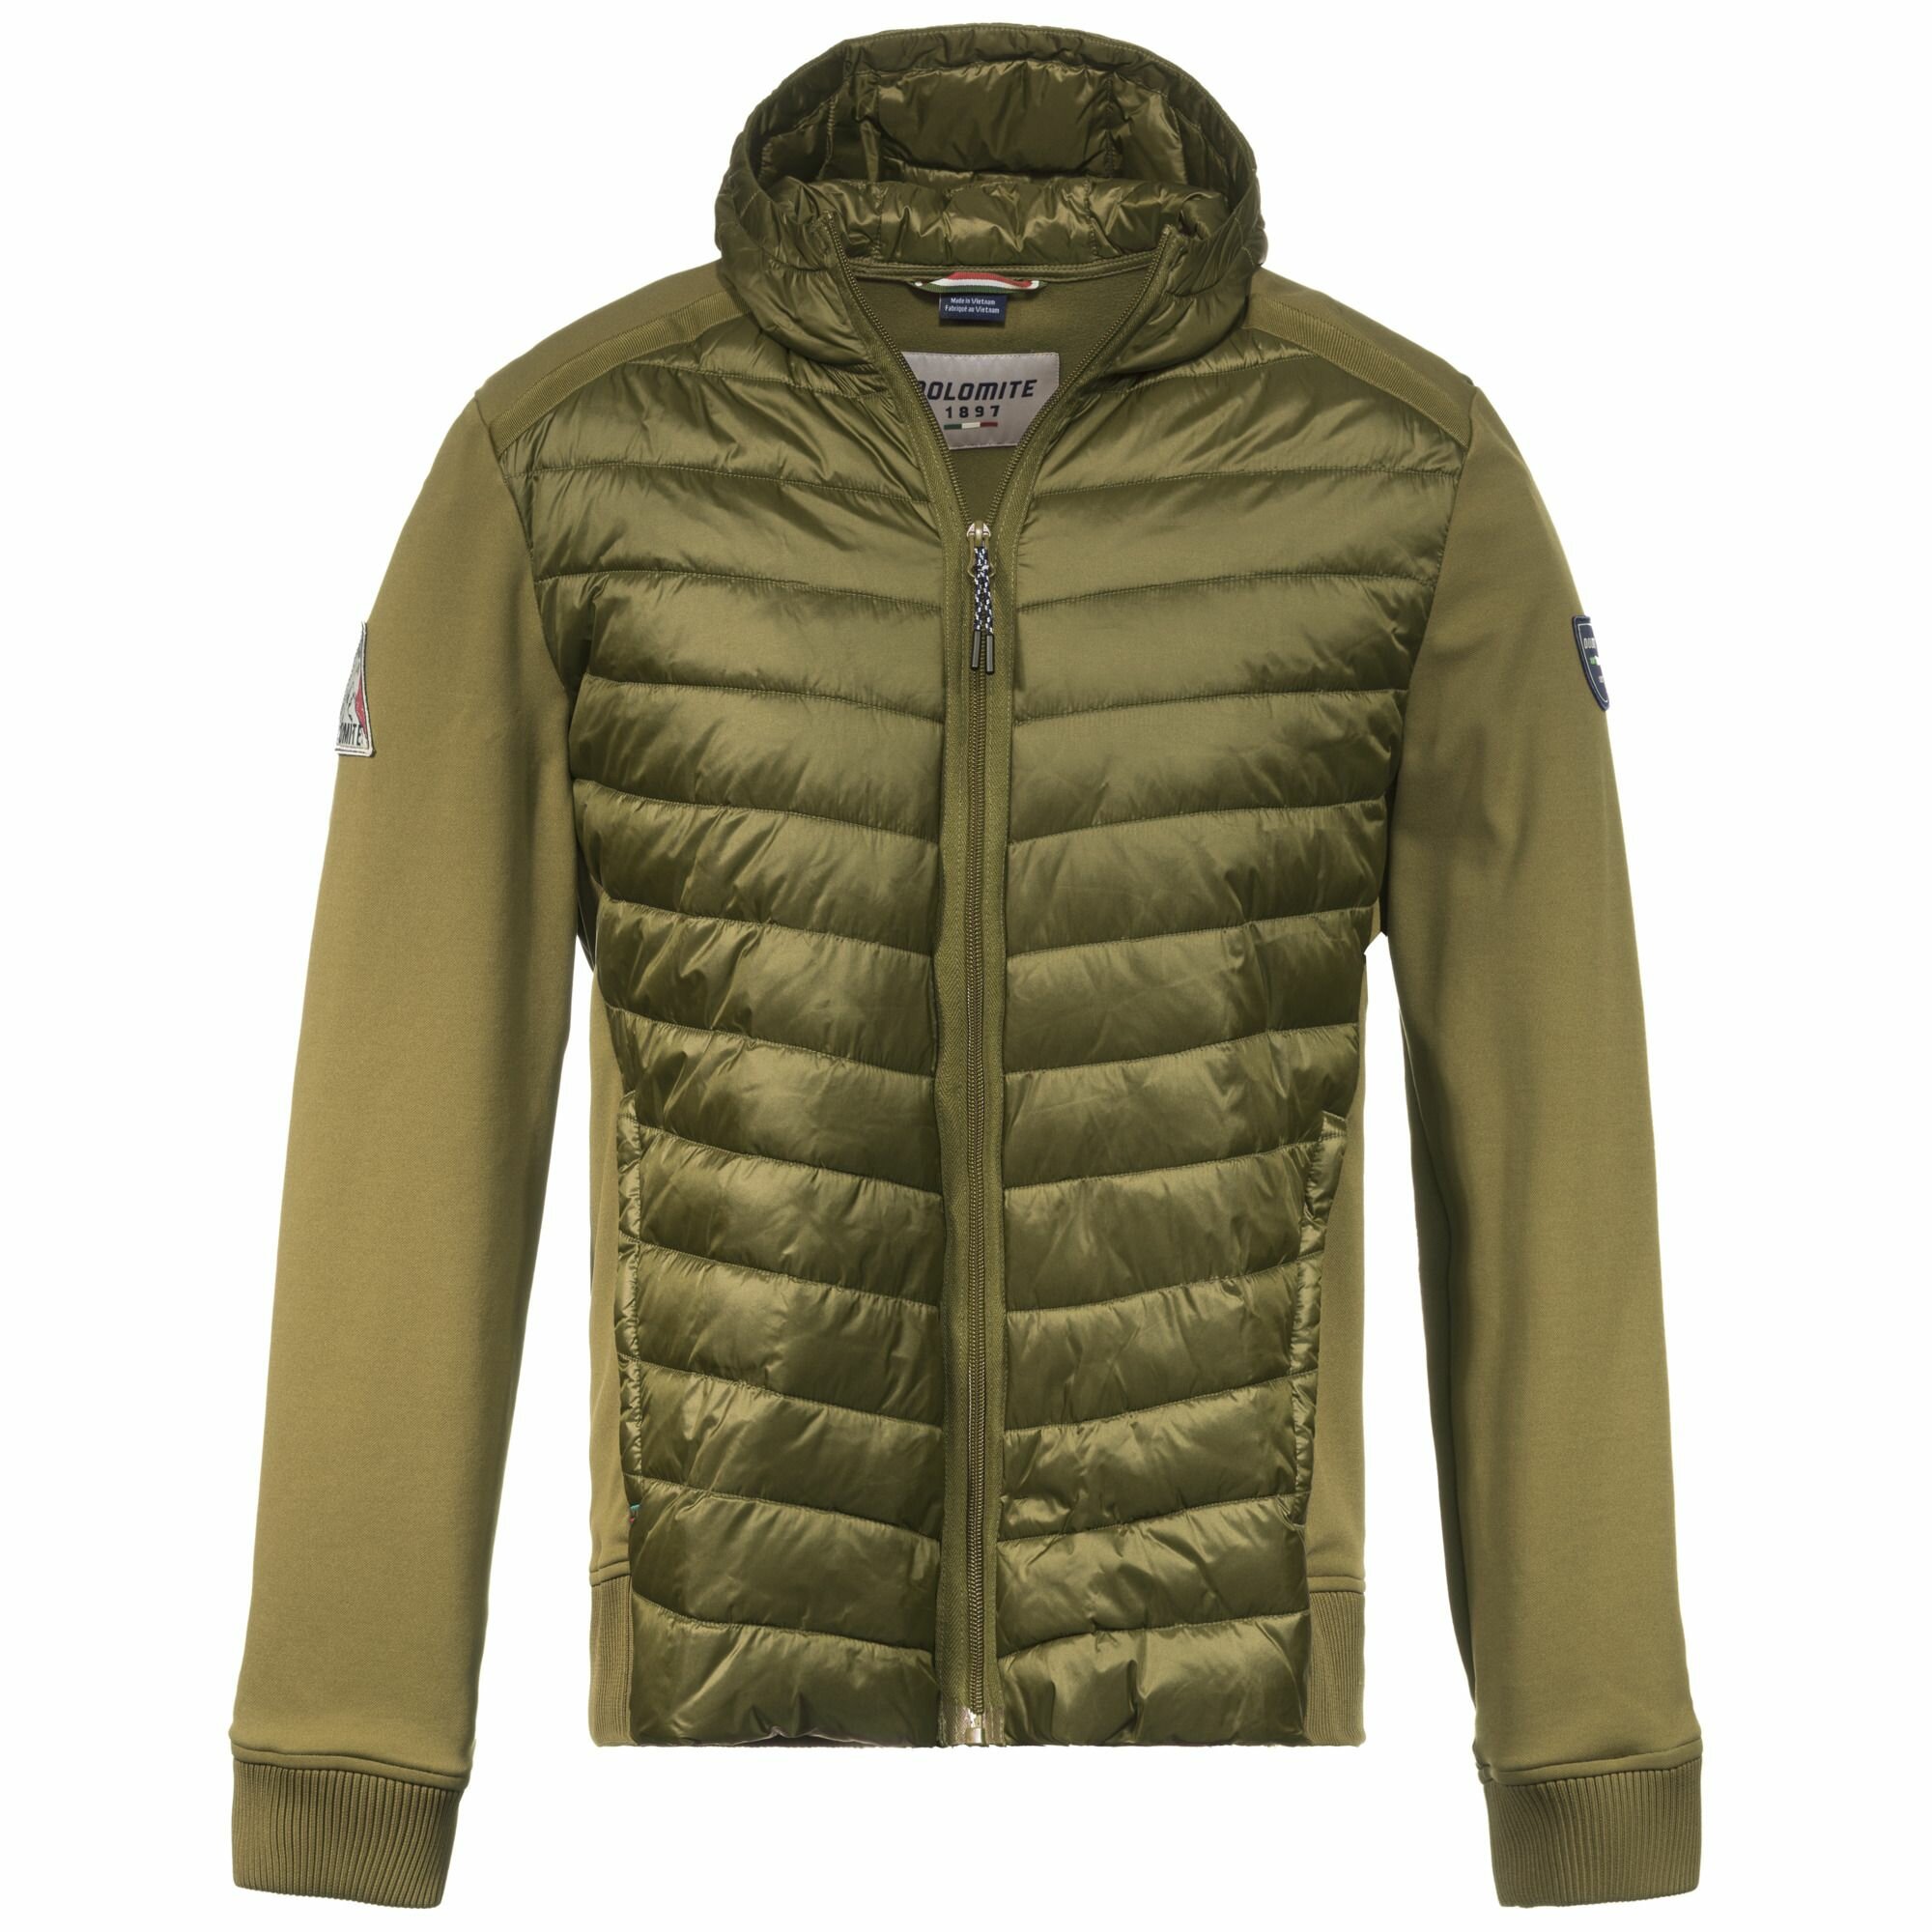 Куртка спортивная DOLOMITE, размер L, хаки, зеленый